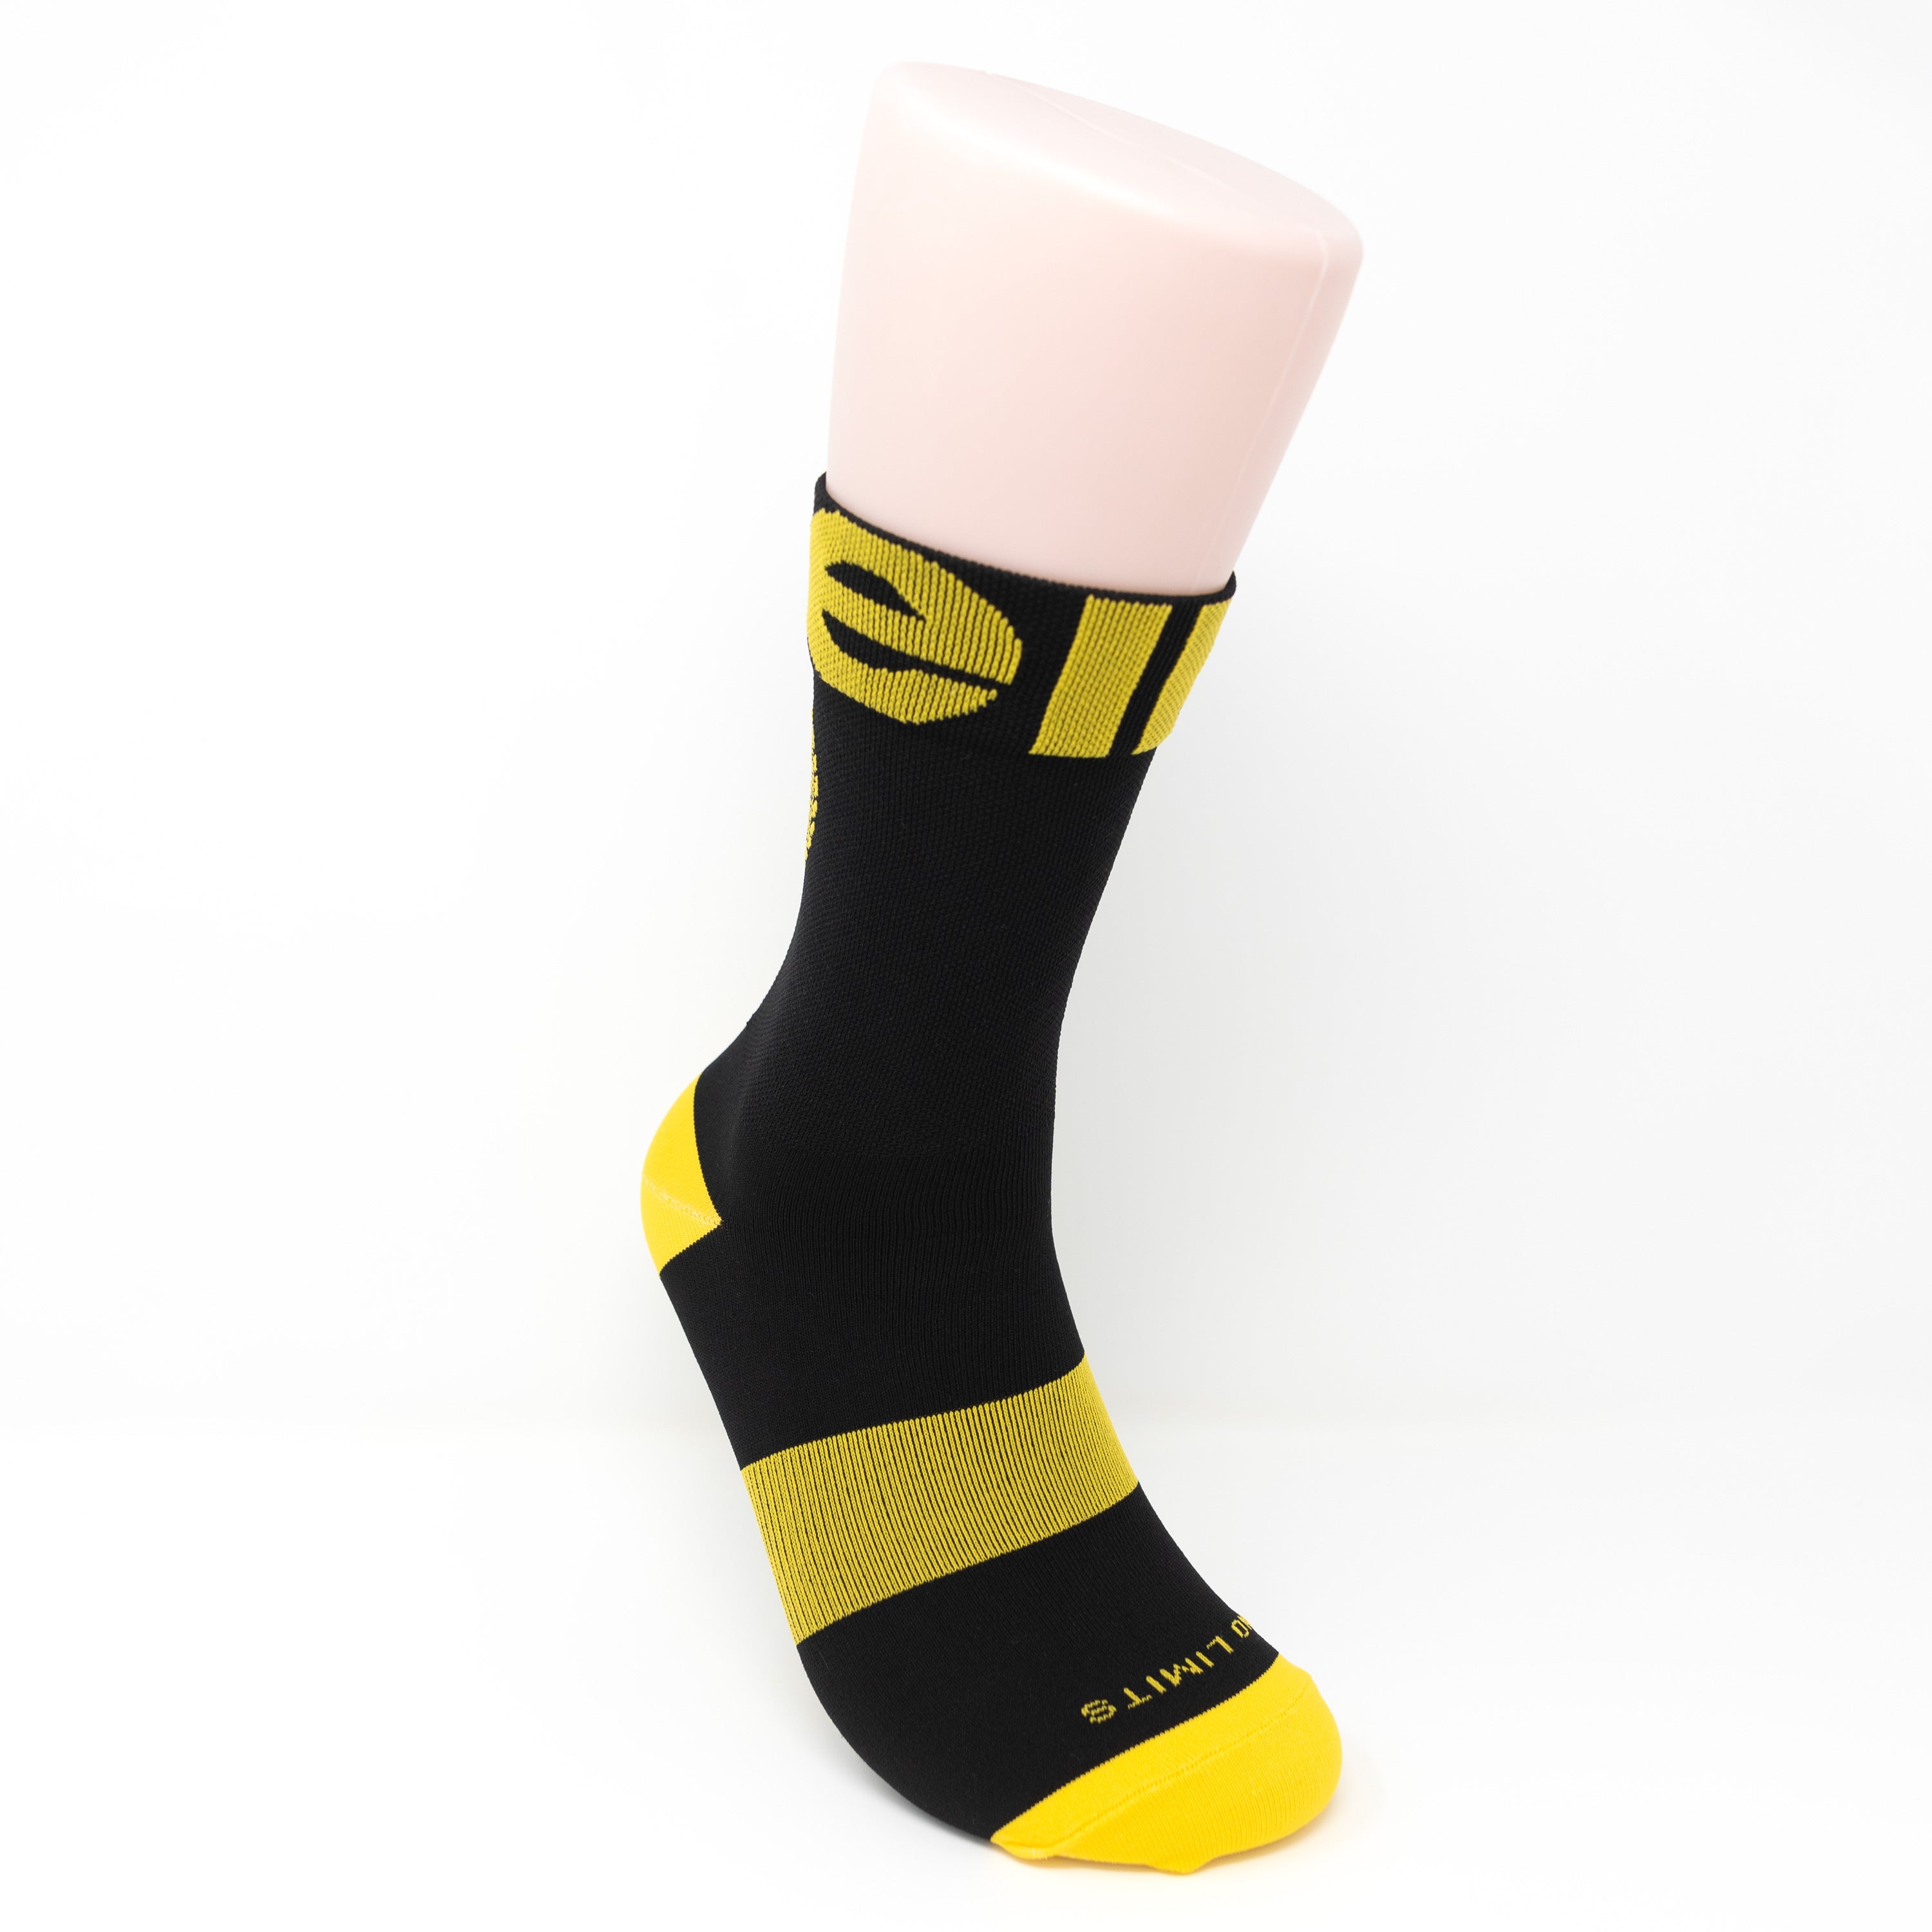 DEDICATED - Low Socks Tibble Black